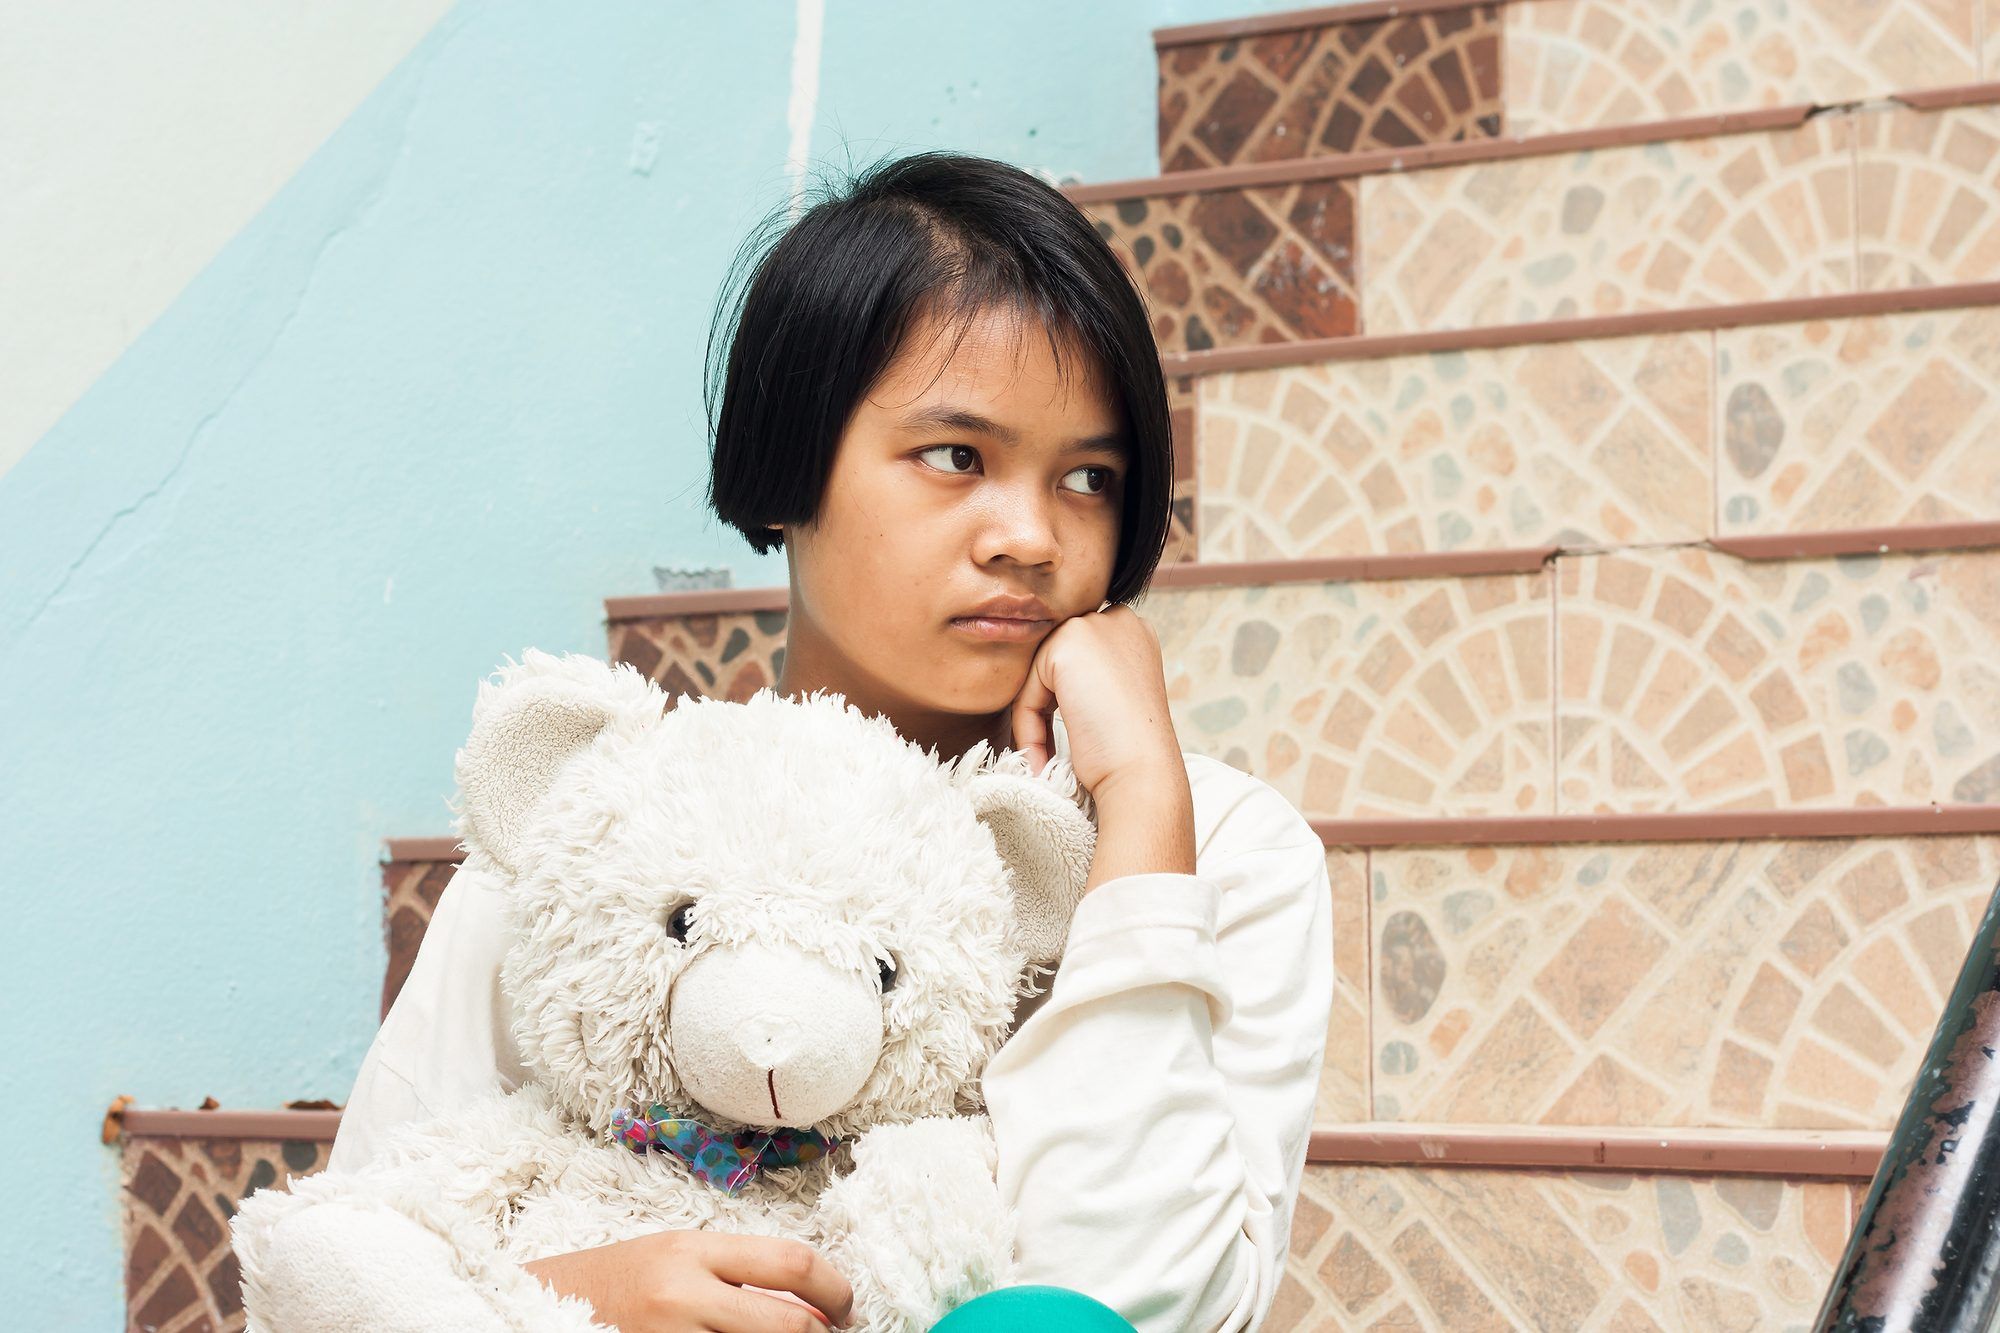 Girl holding teddy bear sits on steps